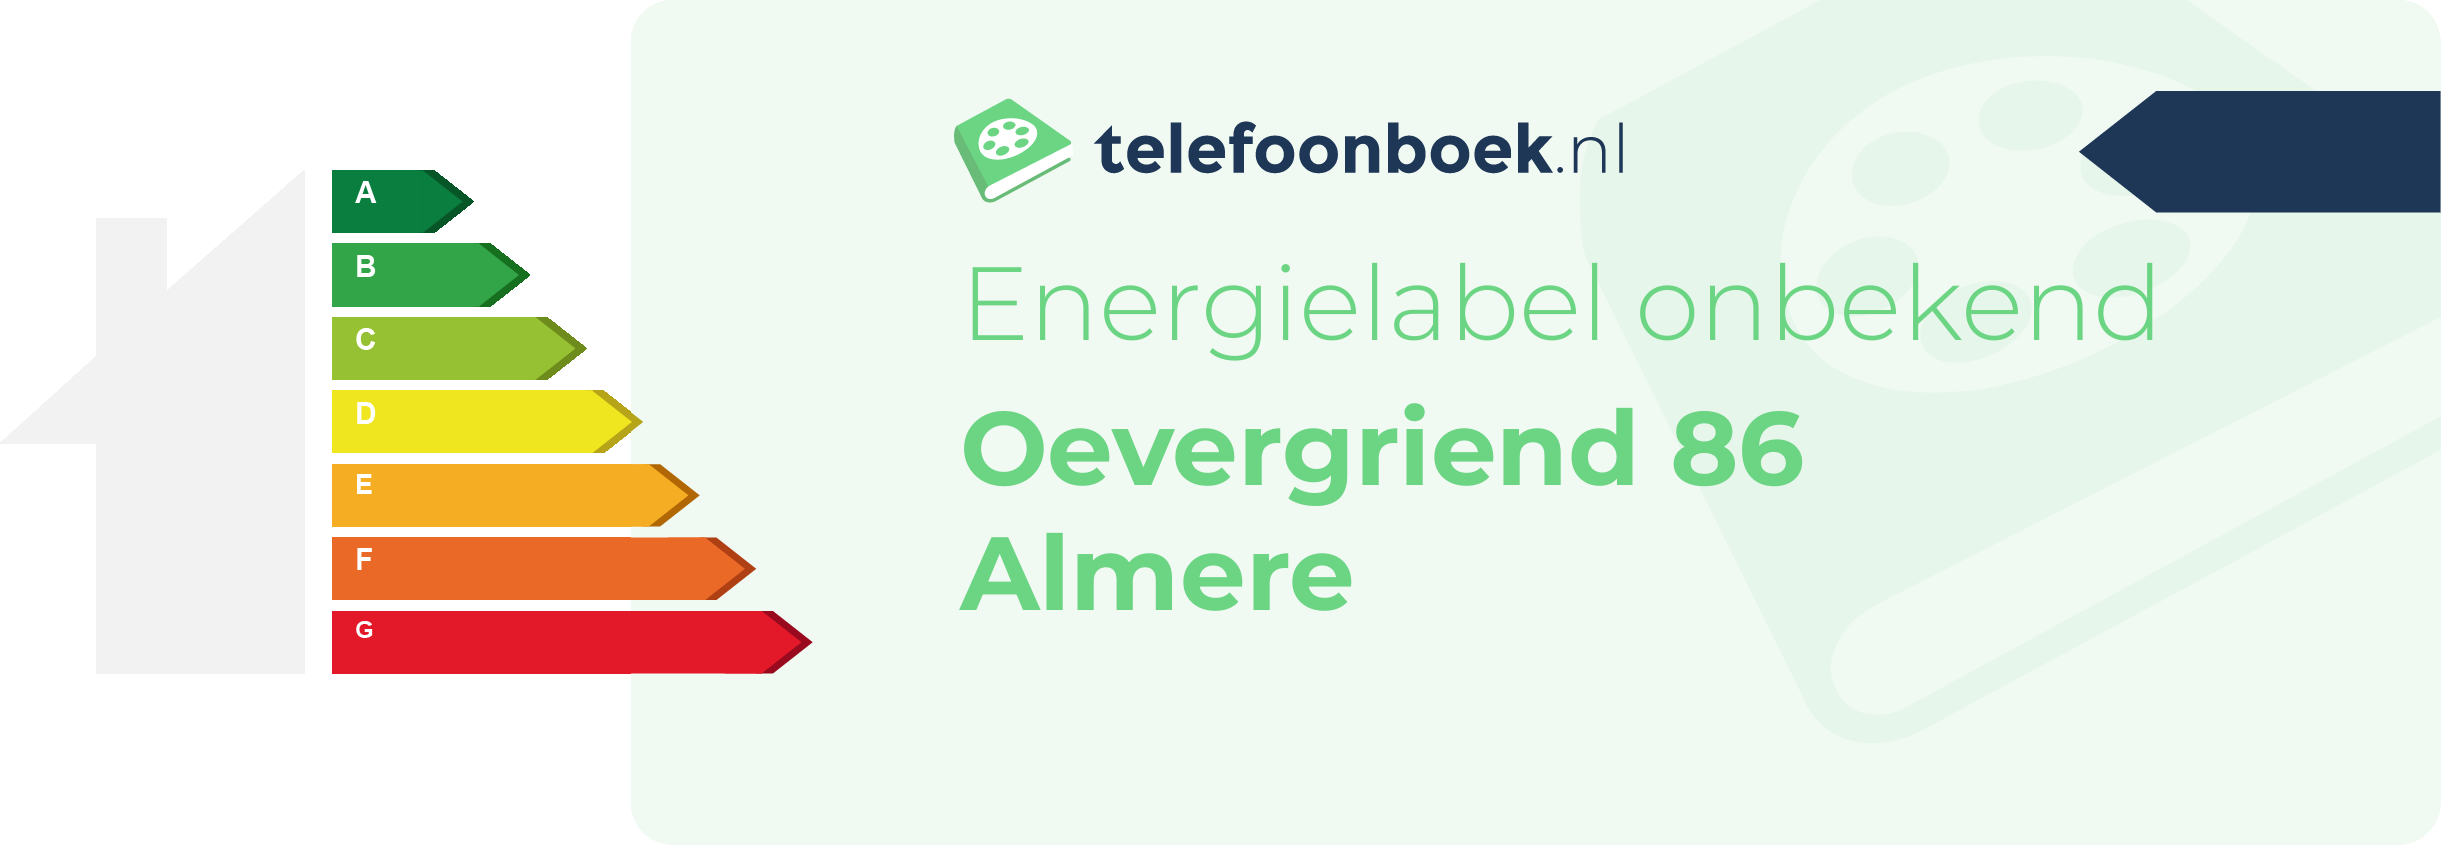 Energielabel Oevergriend 86 Almere